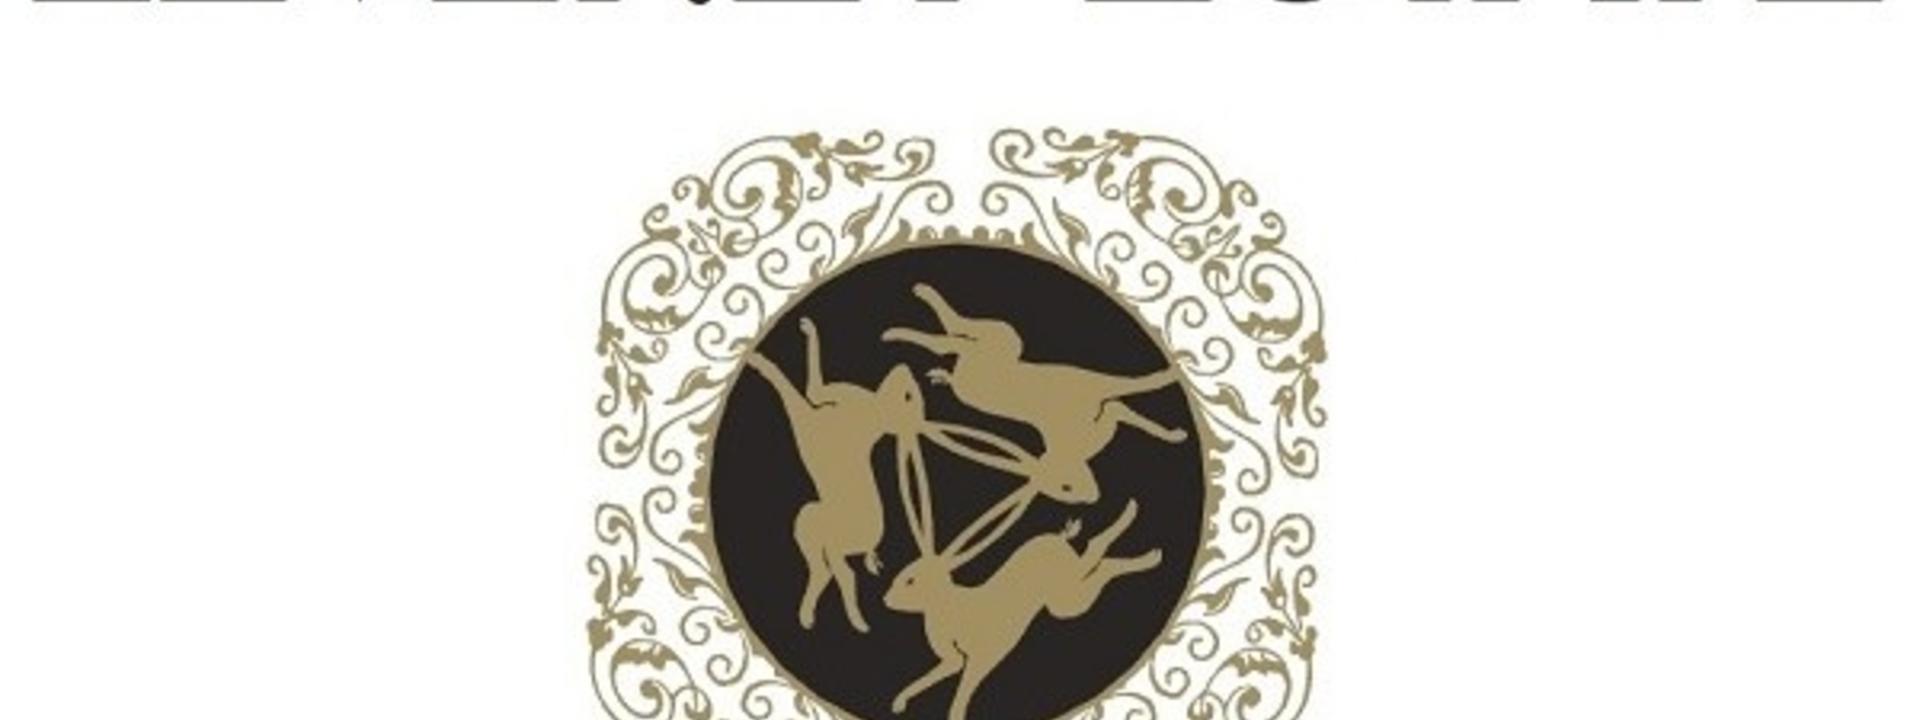 Logo: Leveret Estate Winery and Cellar Door